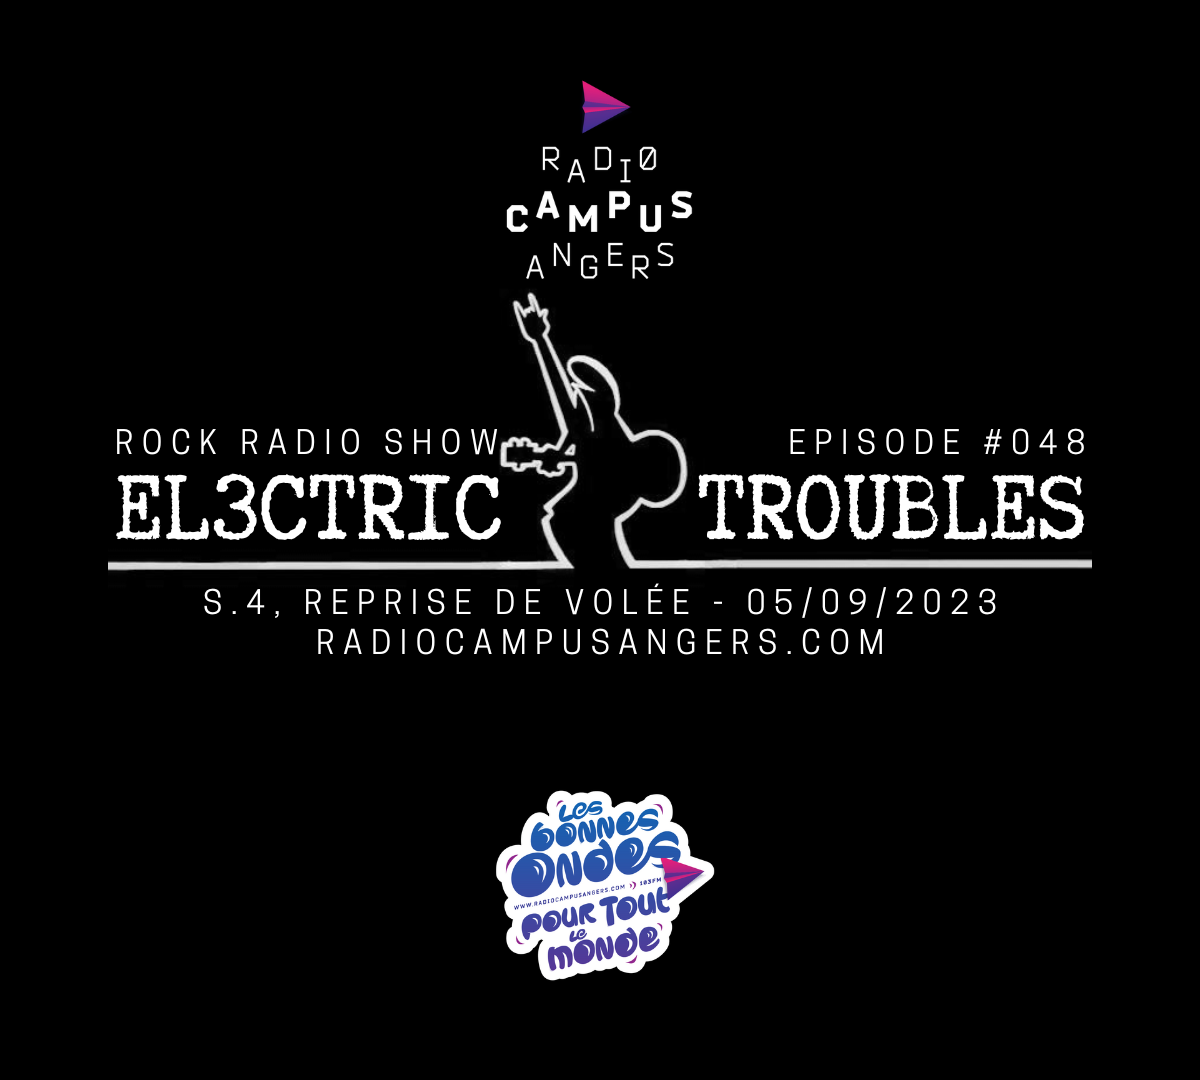 El3ctric Troubles episode 048 rock radio show